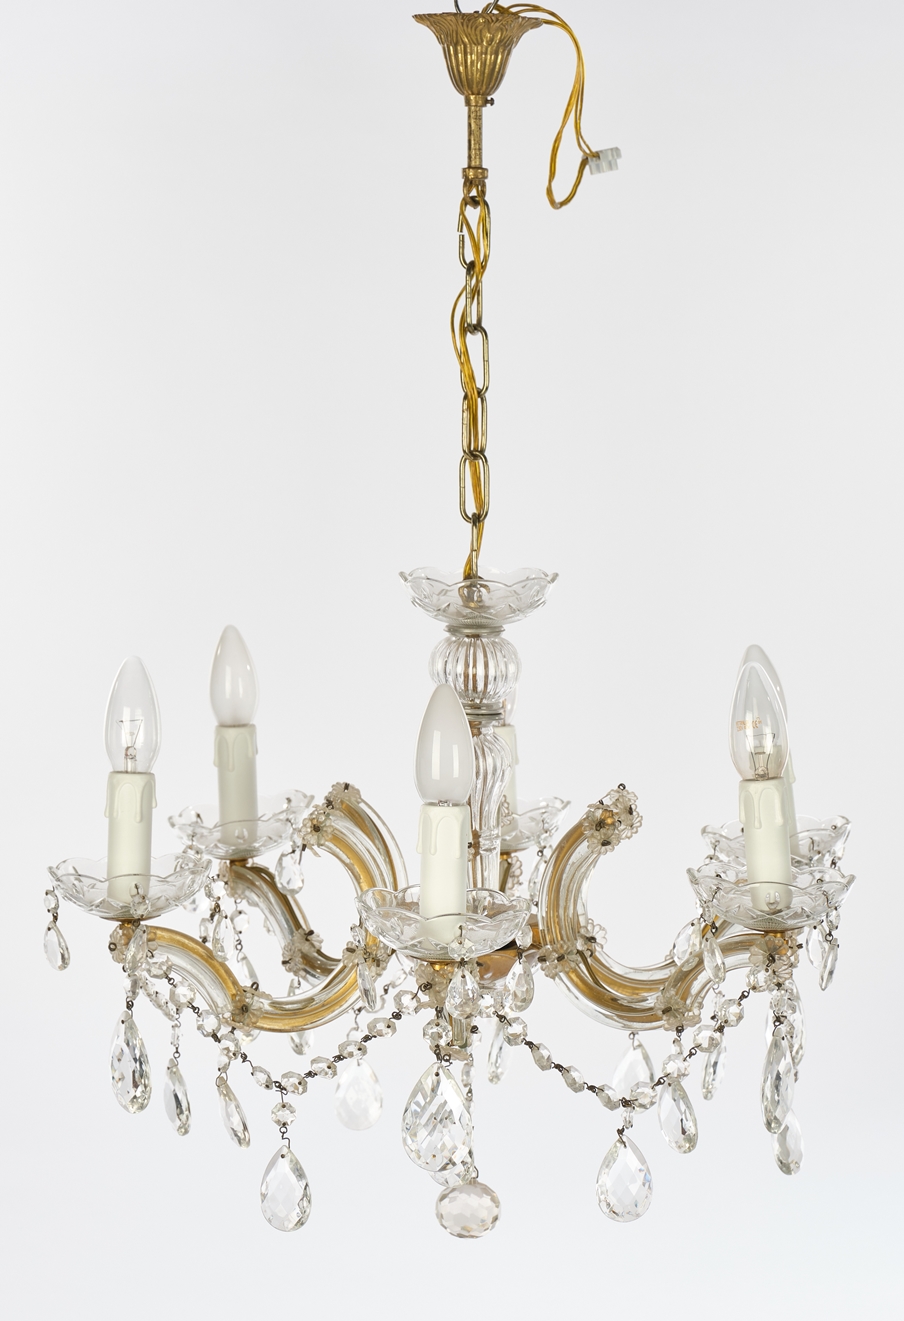 Deckenlüster, 20. Jh., Form Maria Theresia, Kristallglasbehang, sechsflammig, elektrifiziert, ca. 7